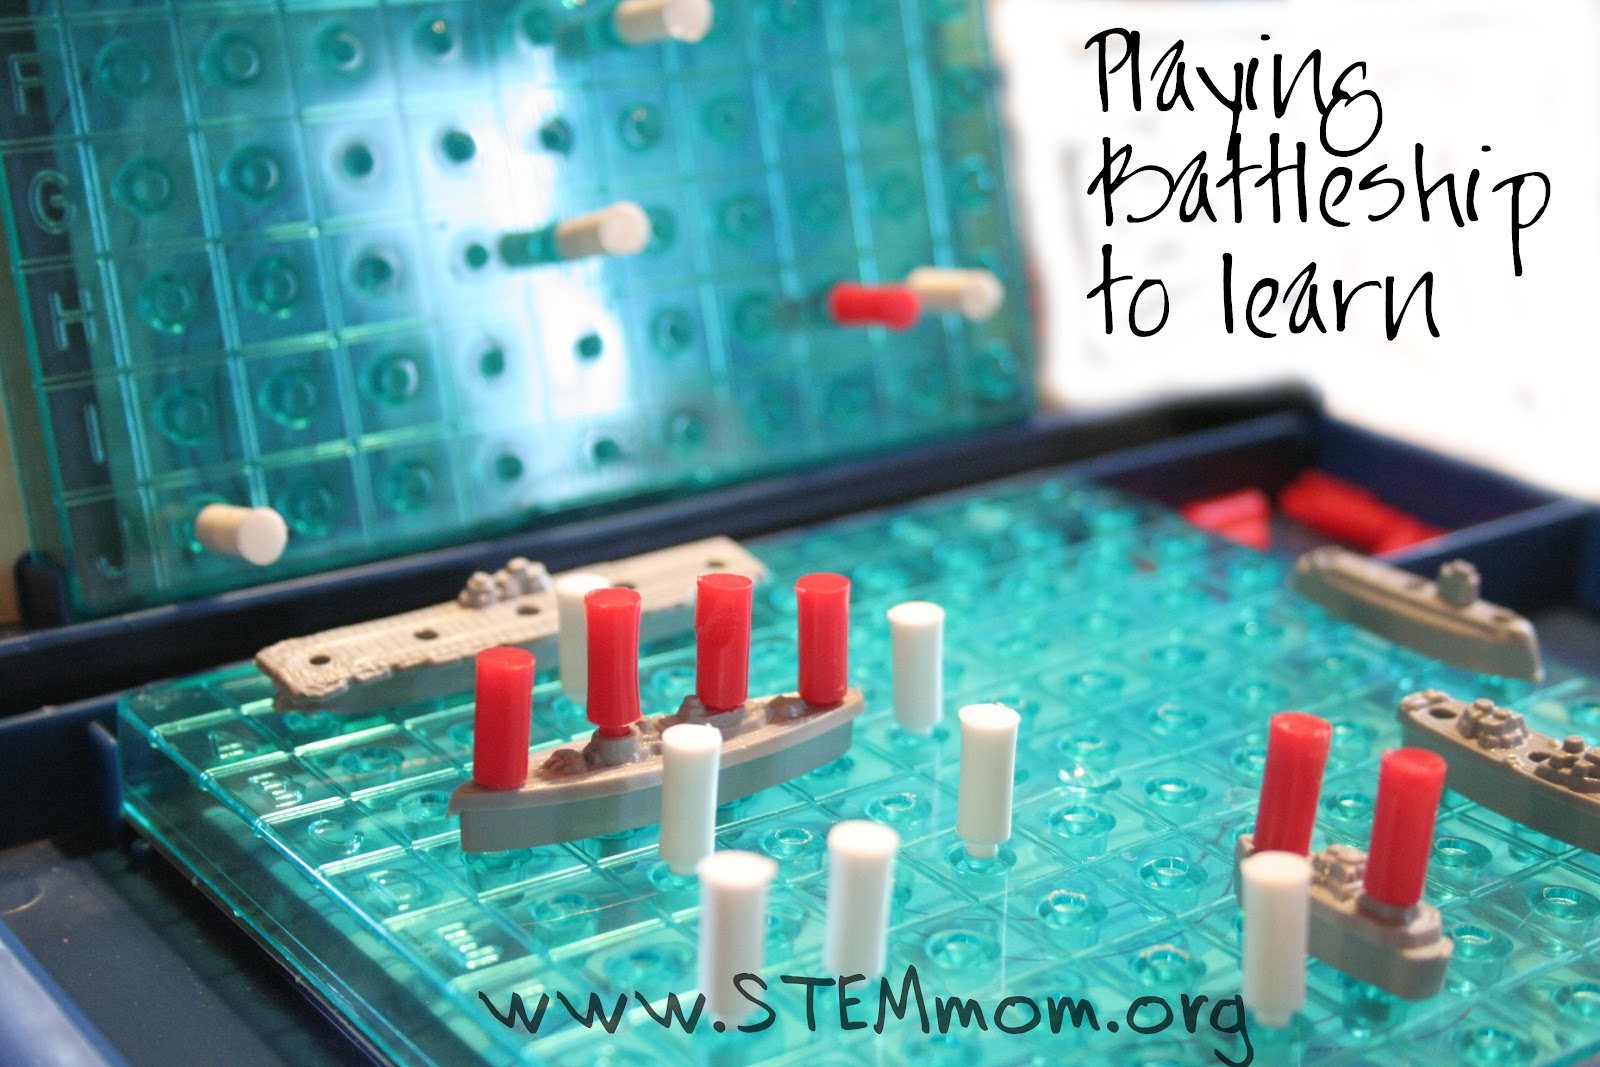 Dr. STEM Mom: Battleship Game as a Teaching Tool